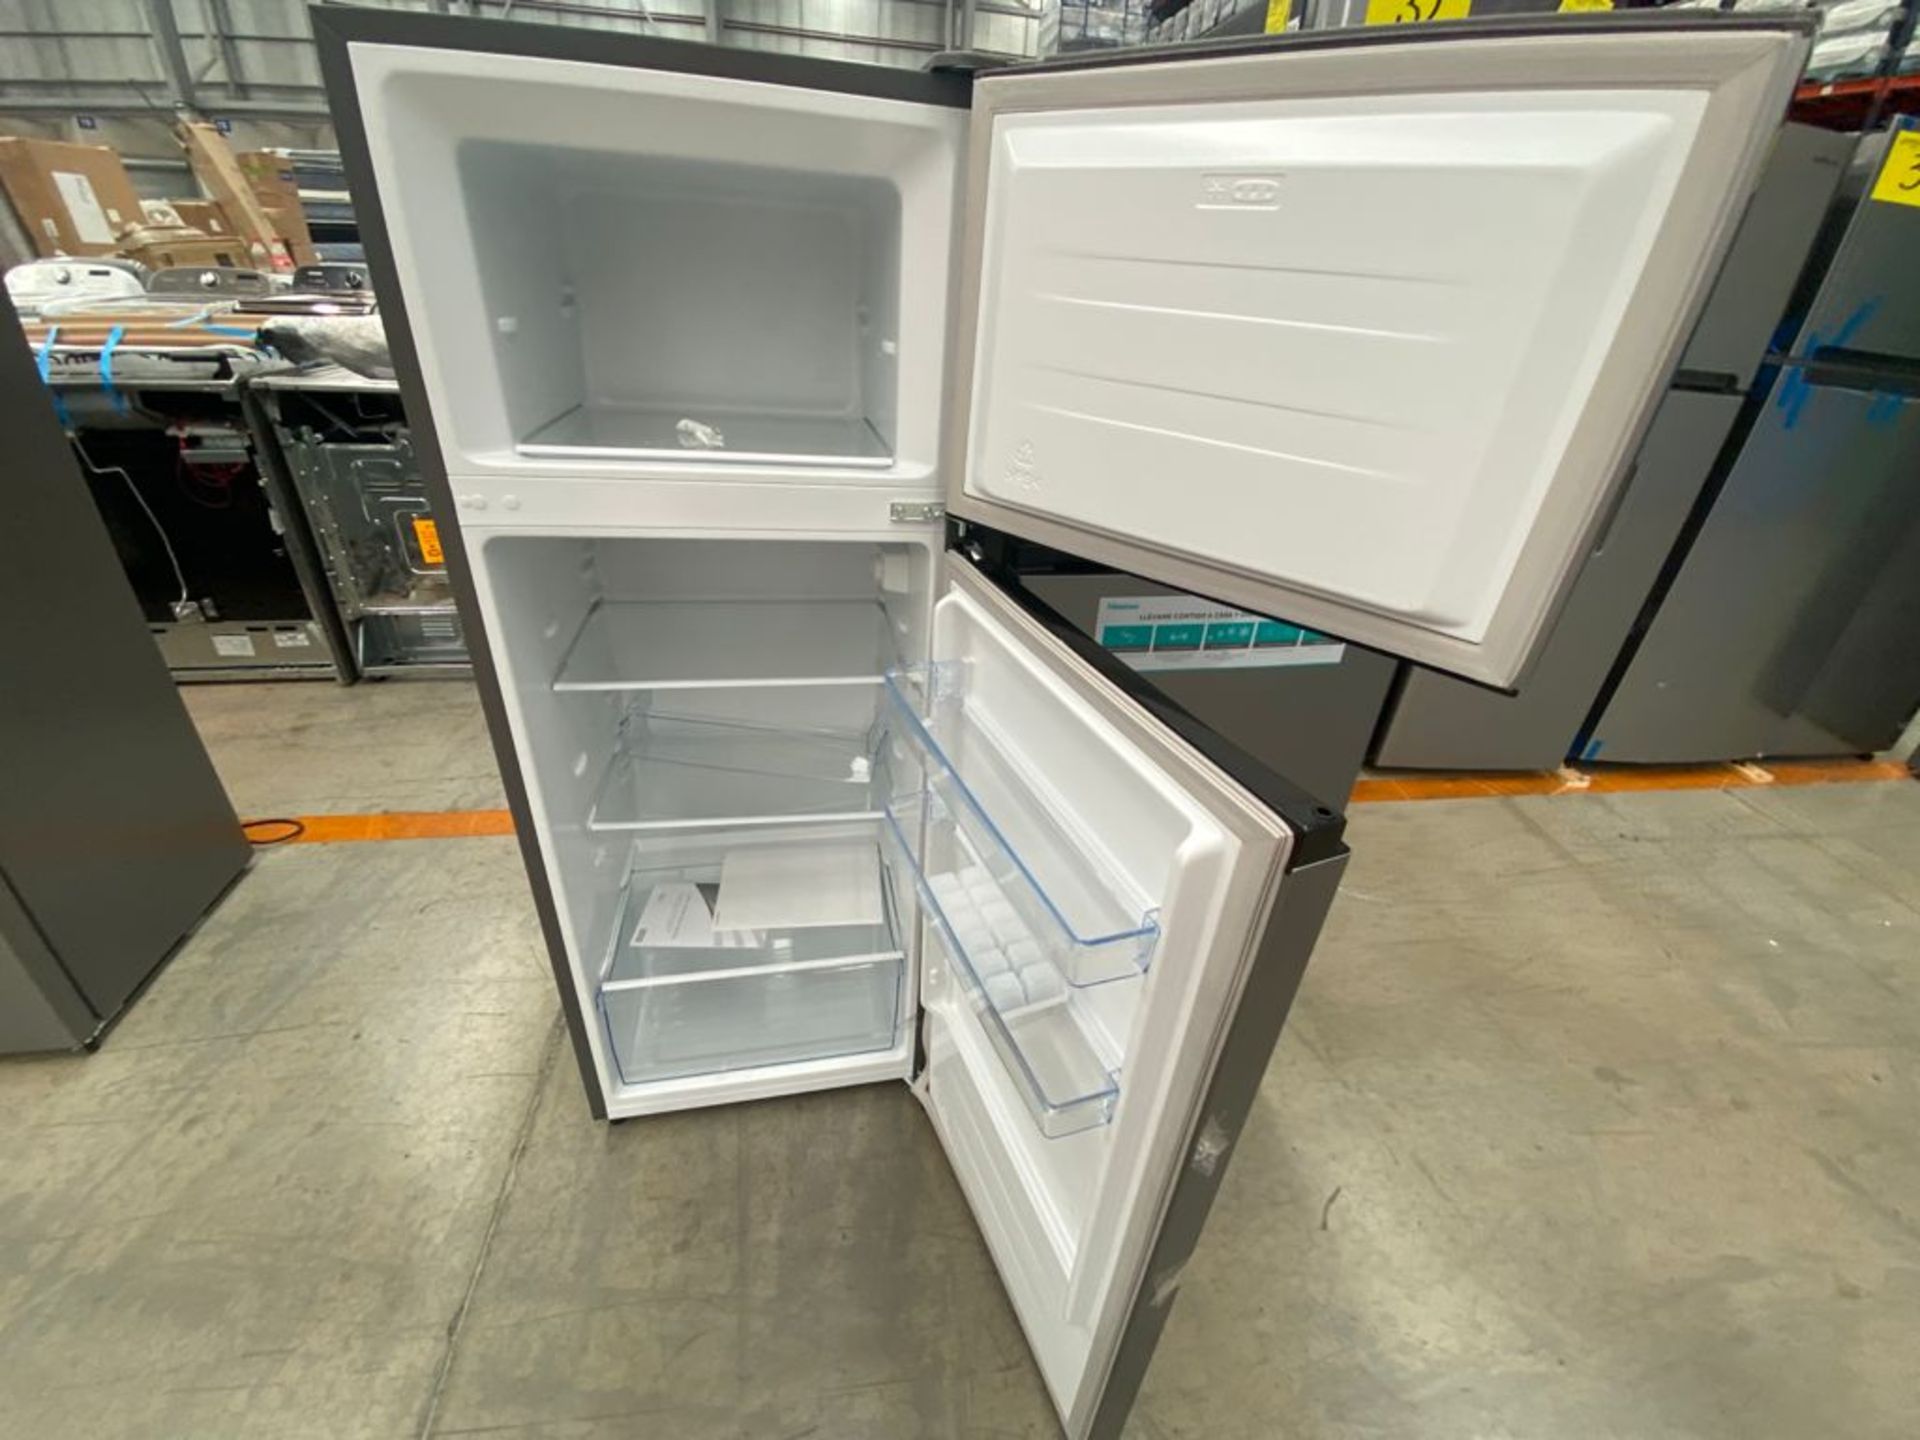 2 Refrigeradores marca Hisense color gris modelo RT80D6AWX - Image 15 of 28